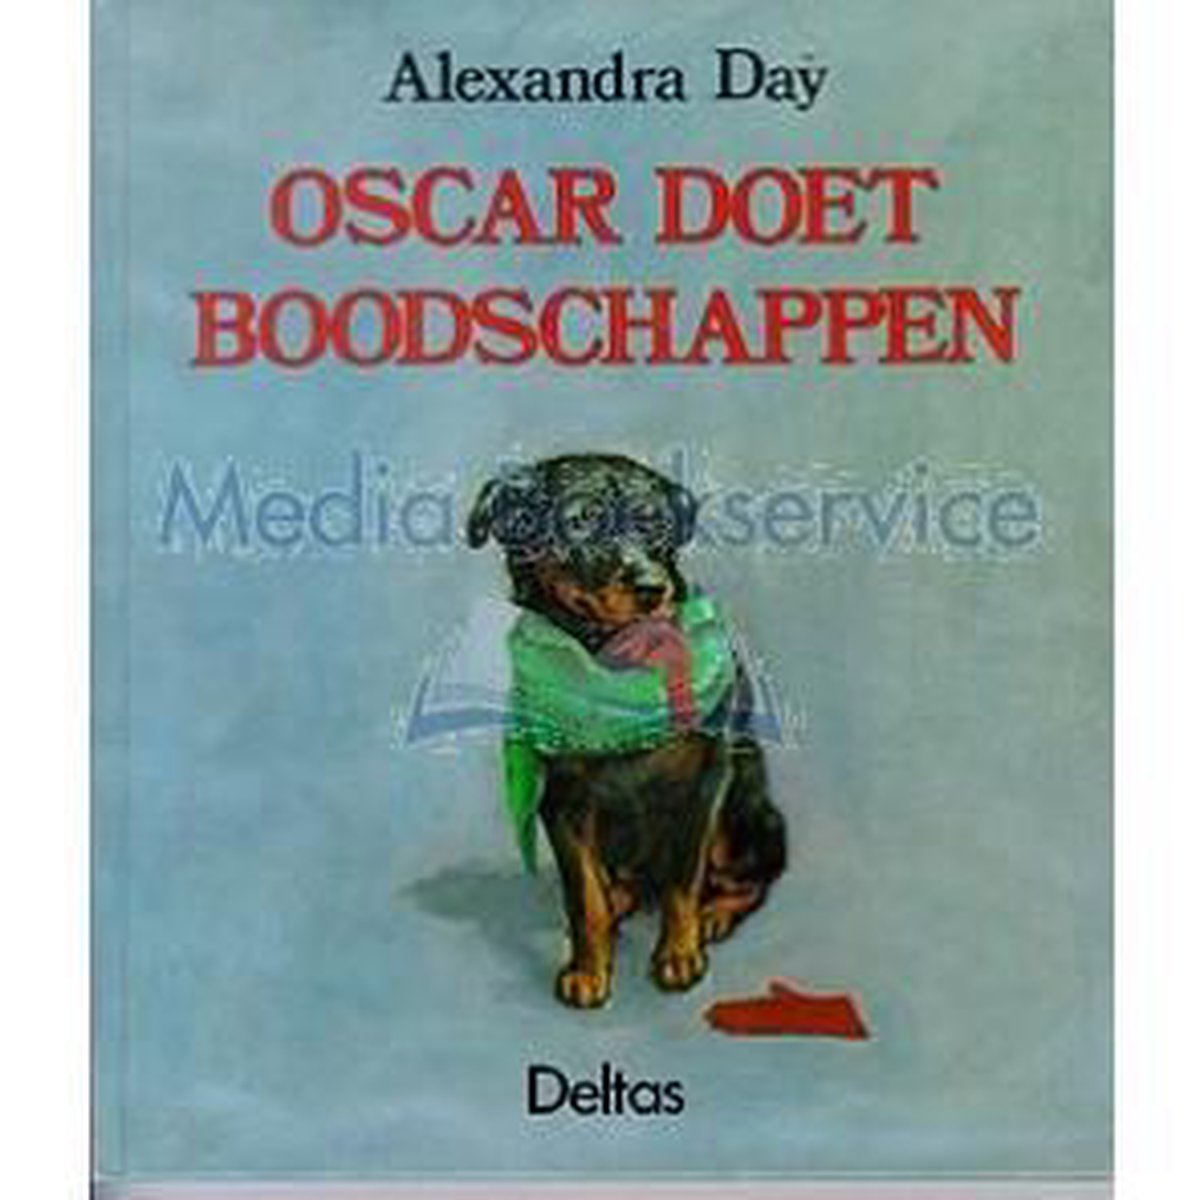 Oscar doet boodschappen - Alexandra Day